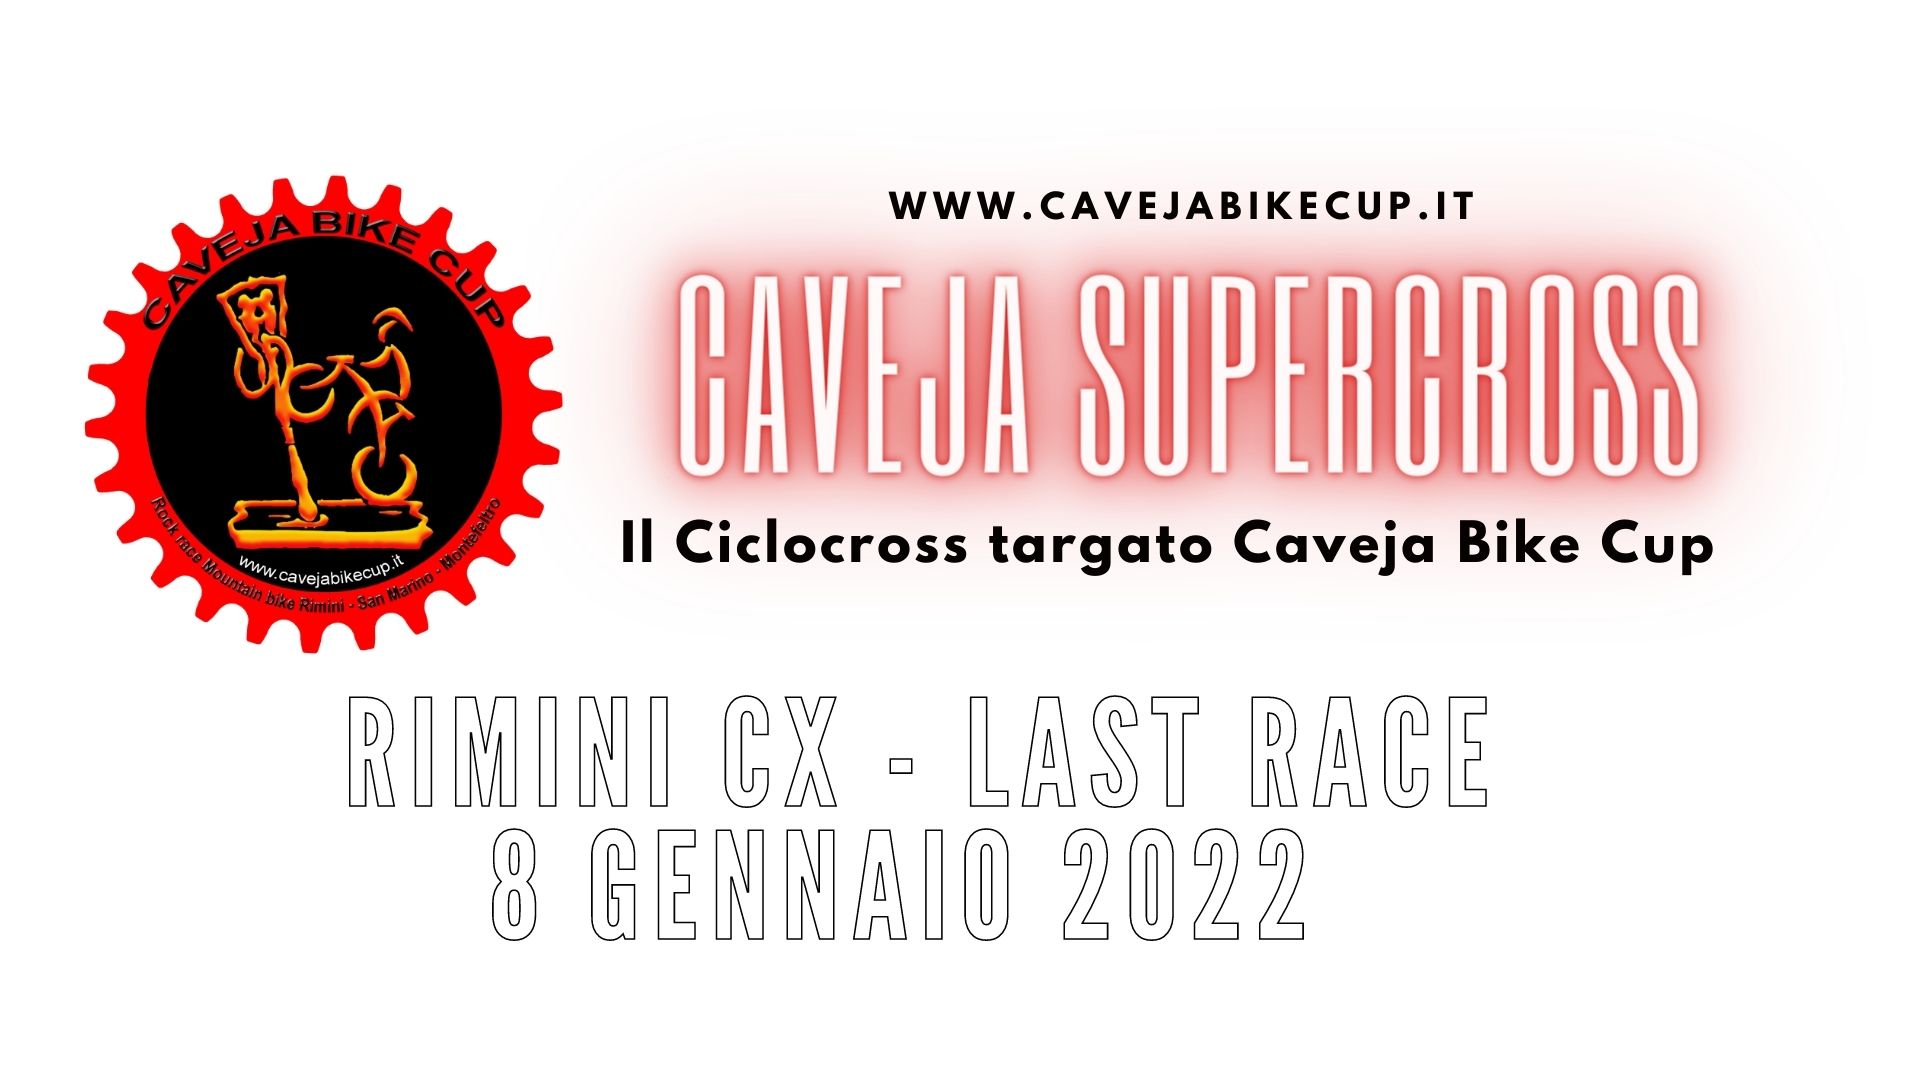 Caveja Supercross, ultimo appuntamento a Rimini sabato 8 gennaio